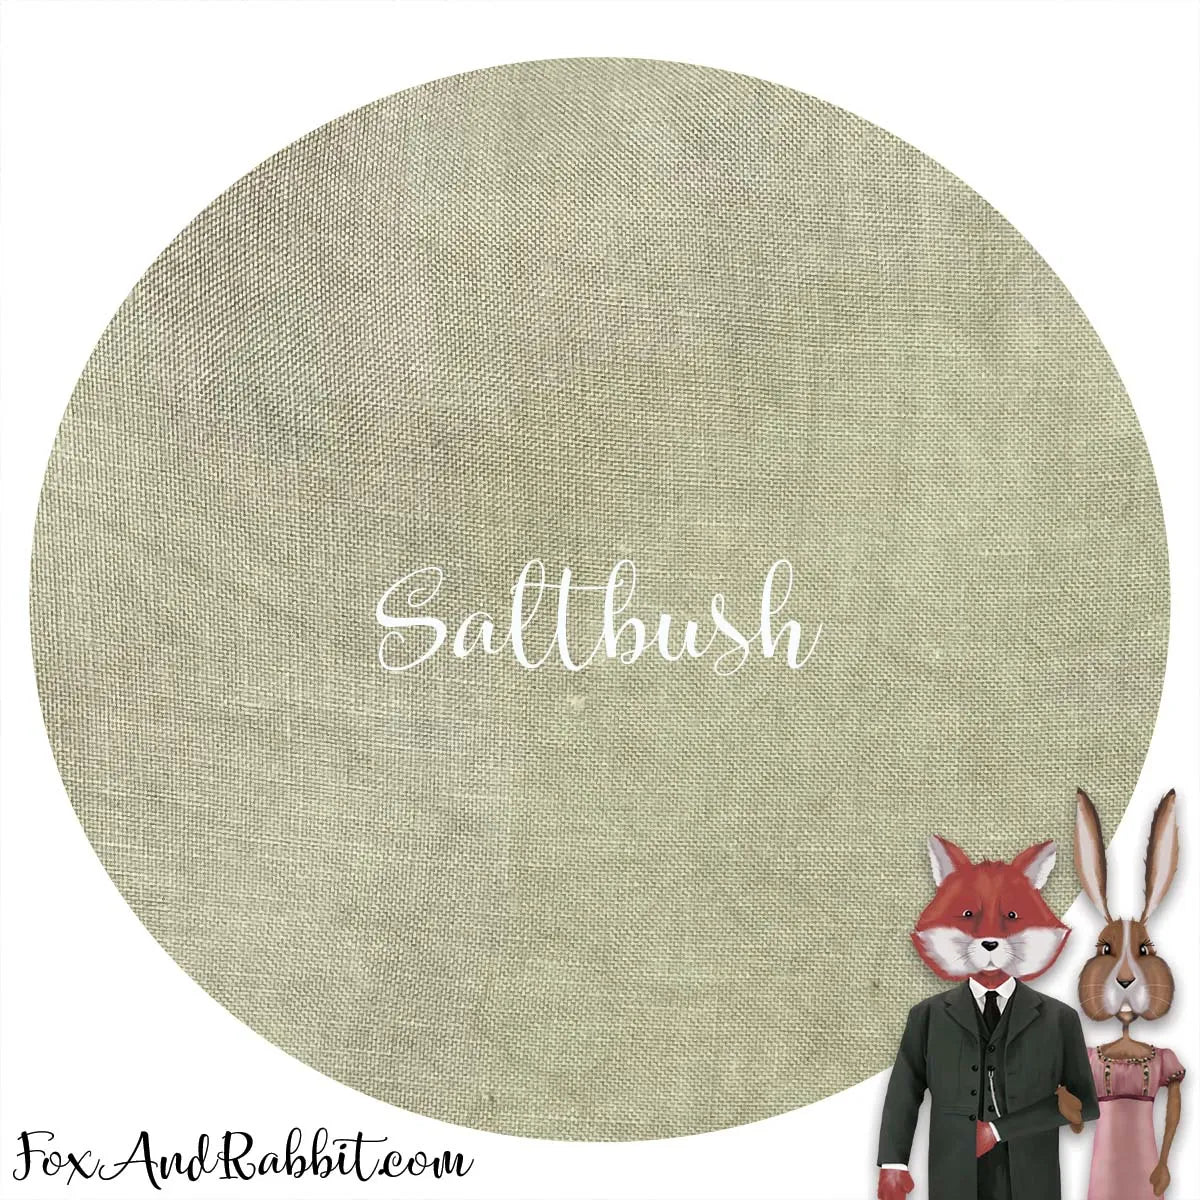 16 Count Aida Saltbush Fox and Rabbit